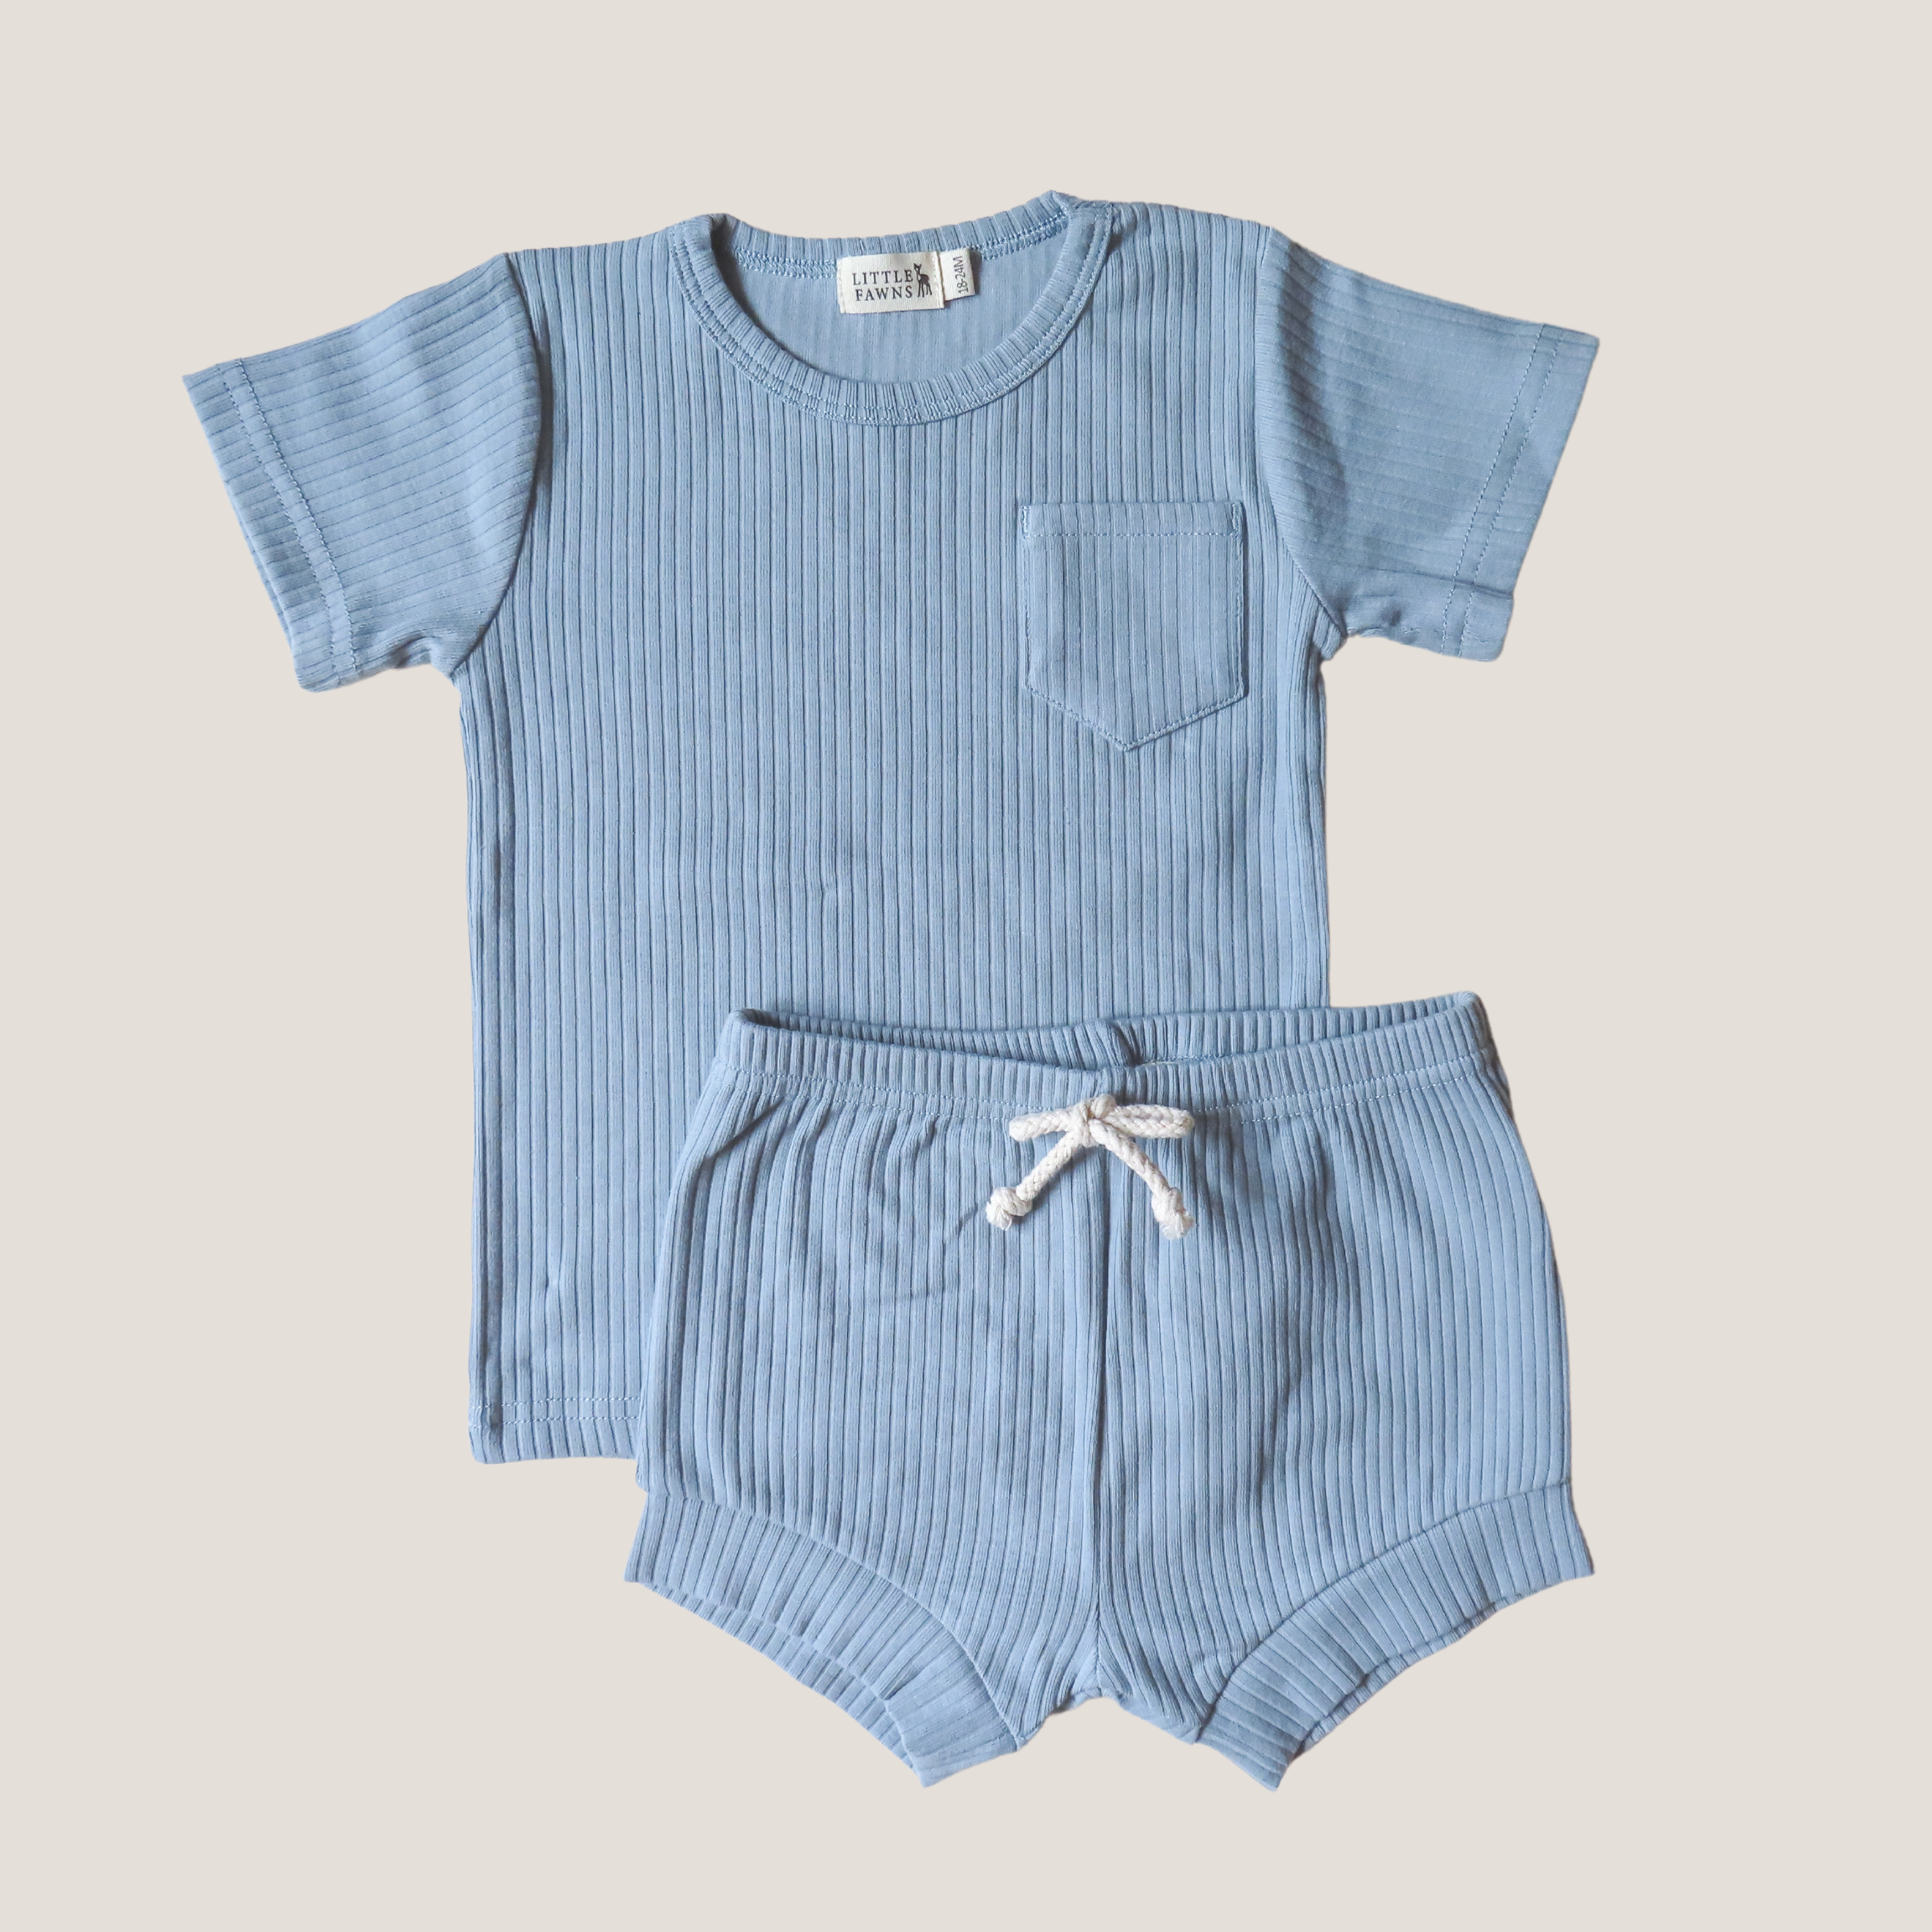 Ribbed Shirt & Short Set in Powder Blue